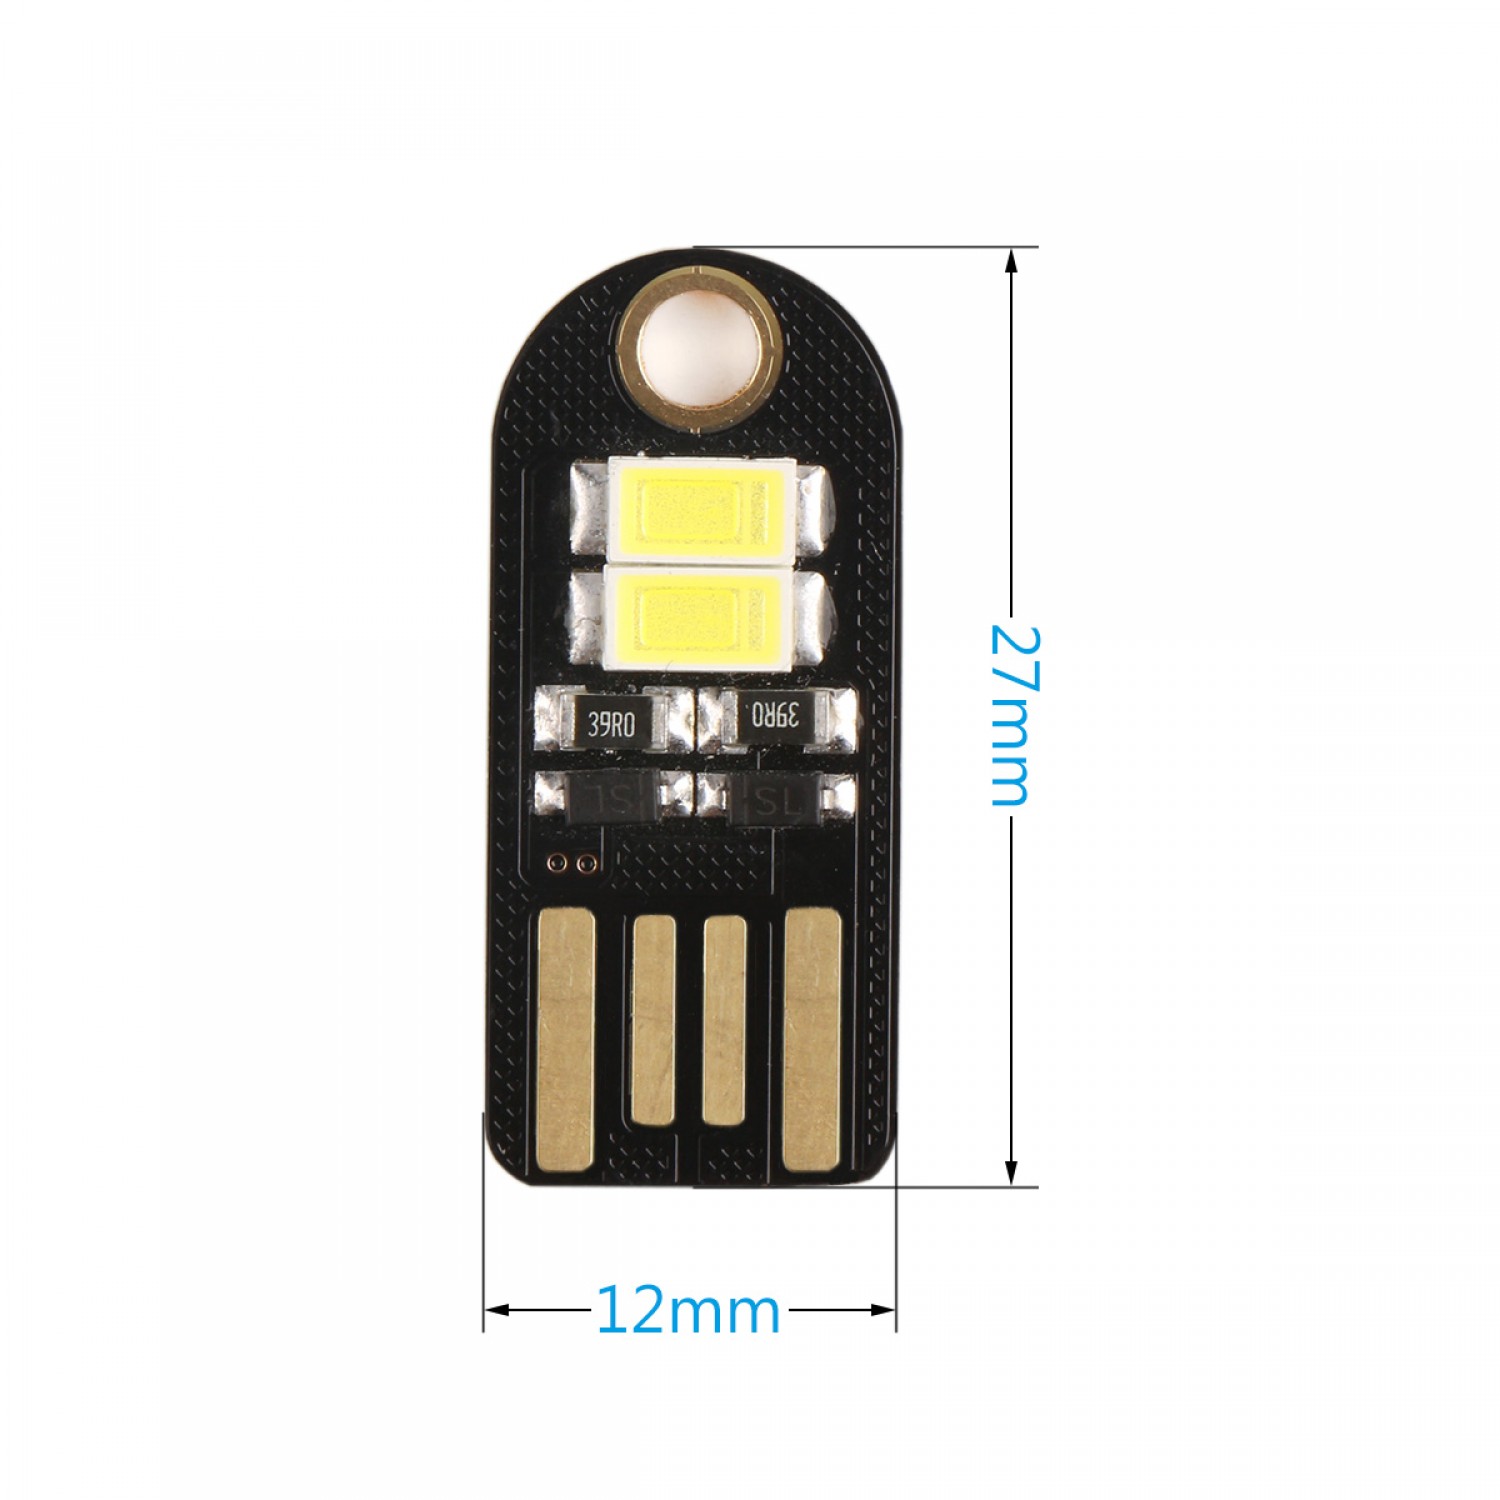 USB Night Light, USB LED Light, Energy-Saving Light, Compact LED